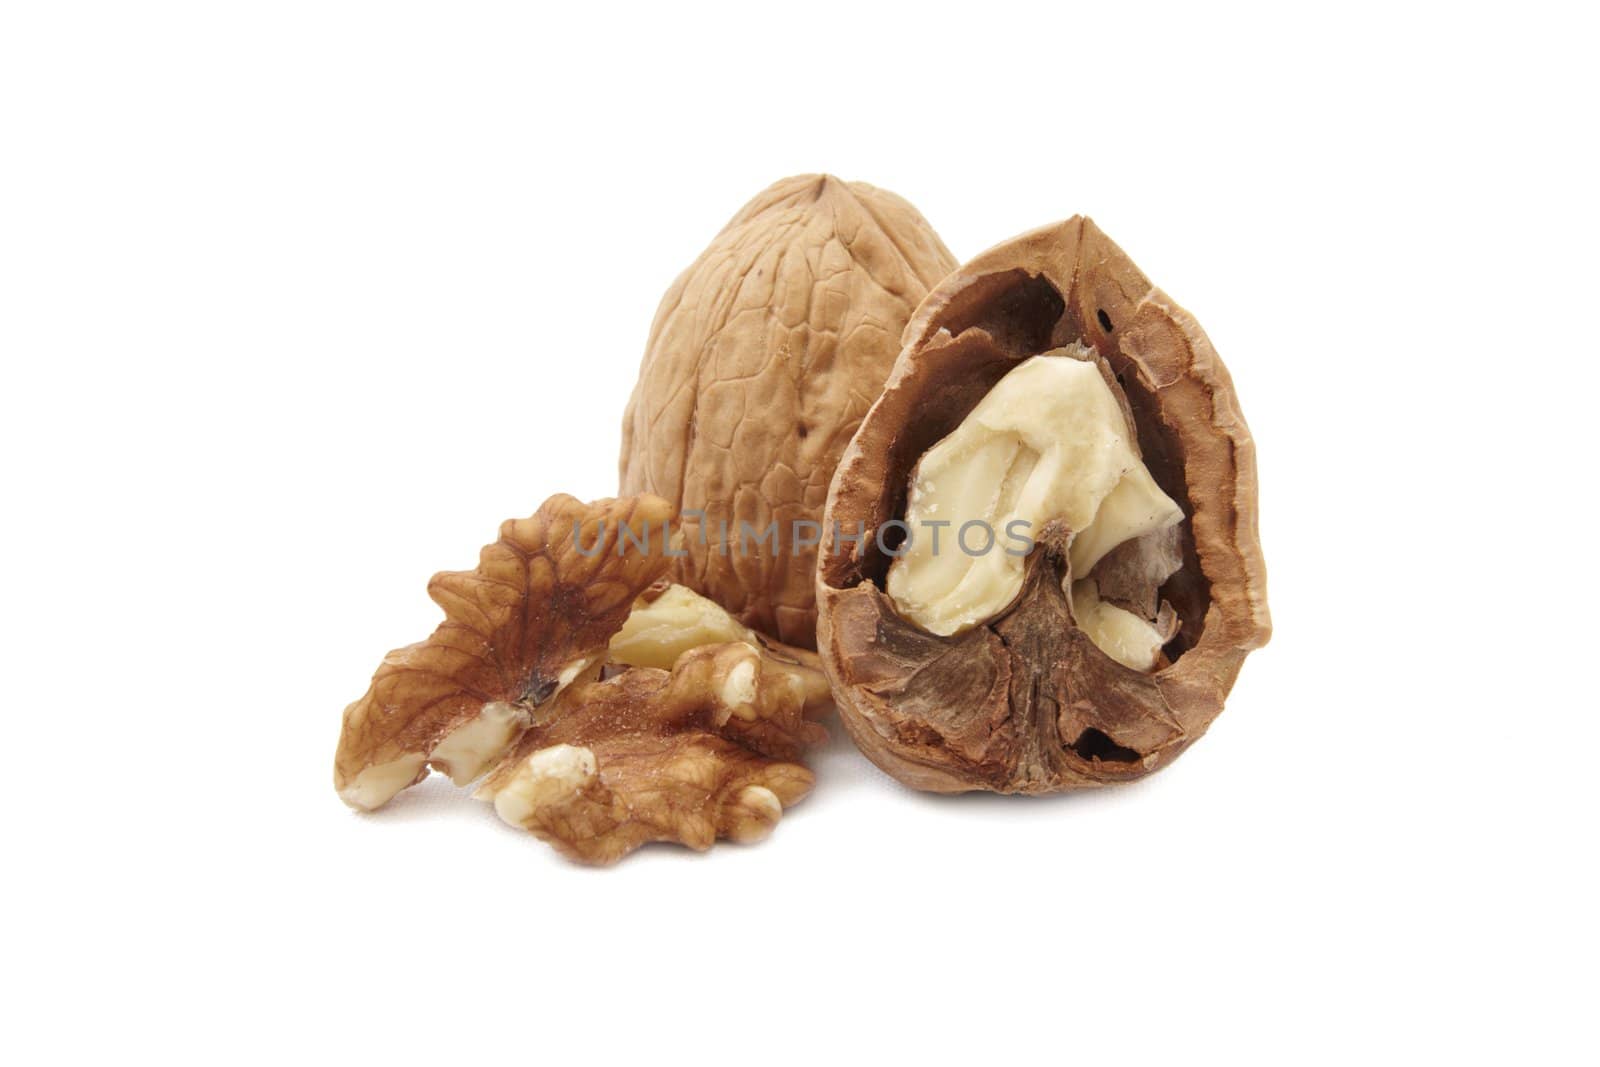 Isolated walnuts by Nikonas